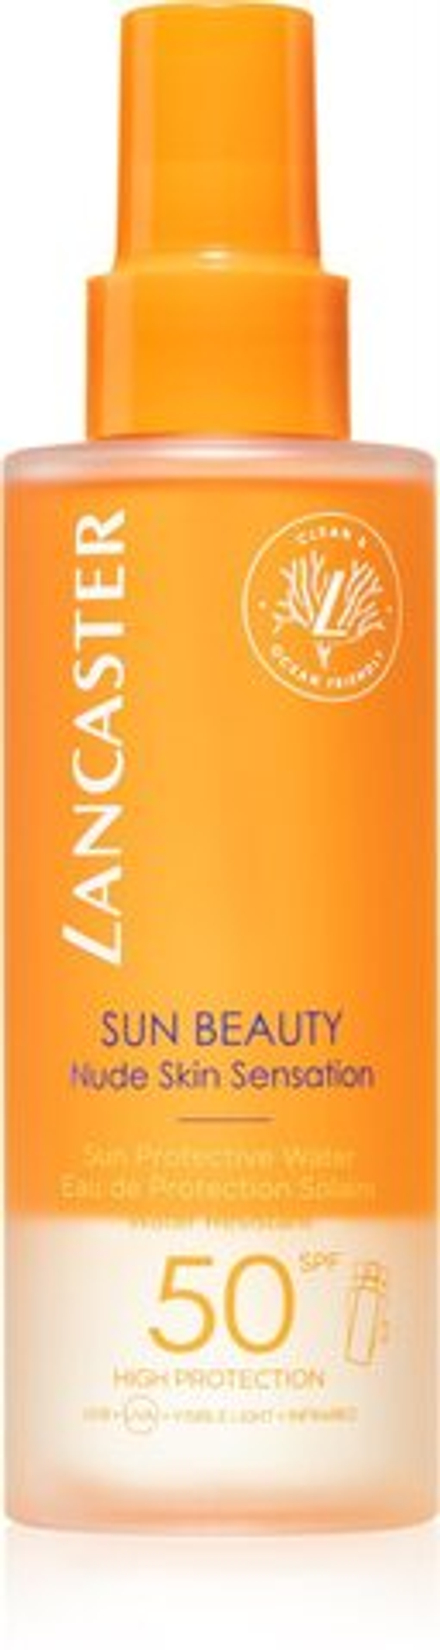 Lancaster защитный спрей для загара SPF 50 Sun Beauty Sun Protective Water